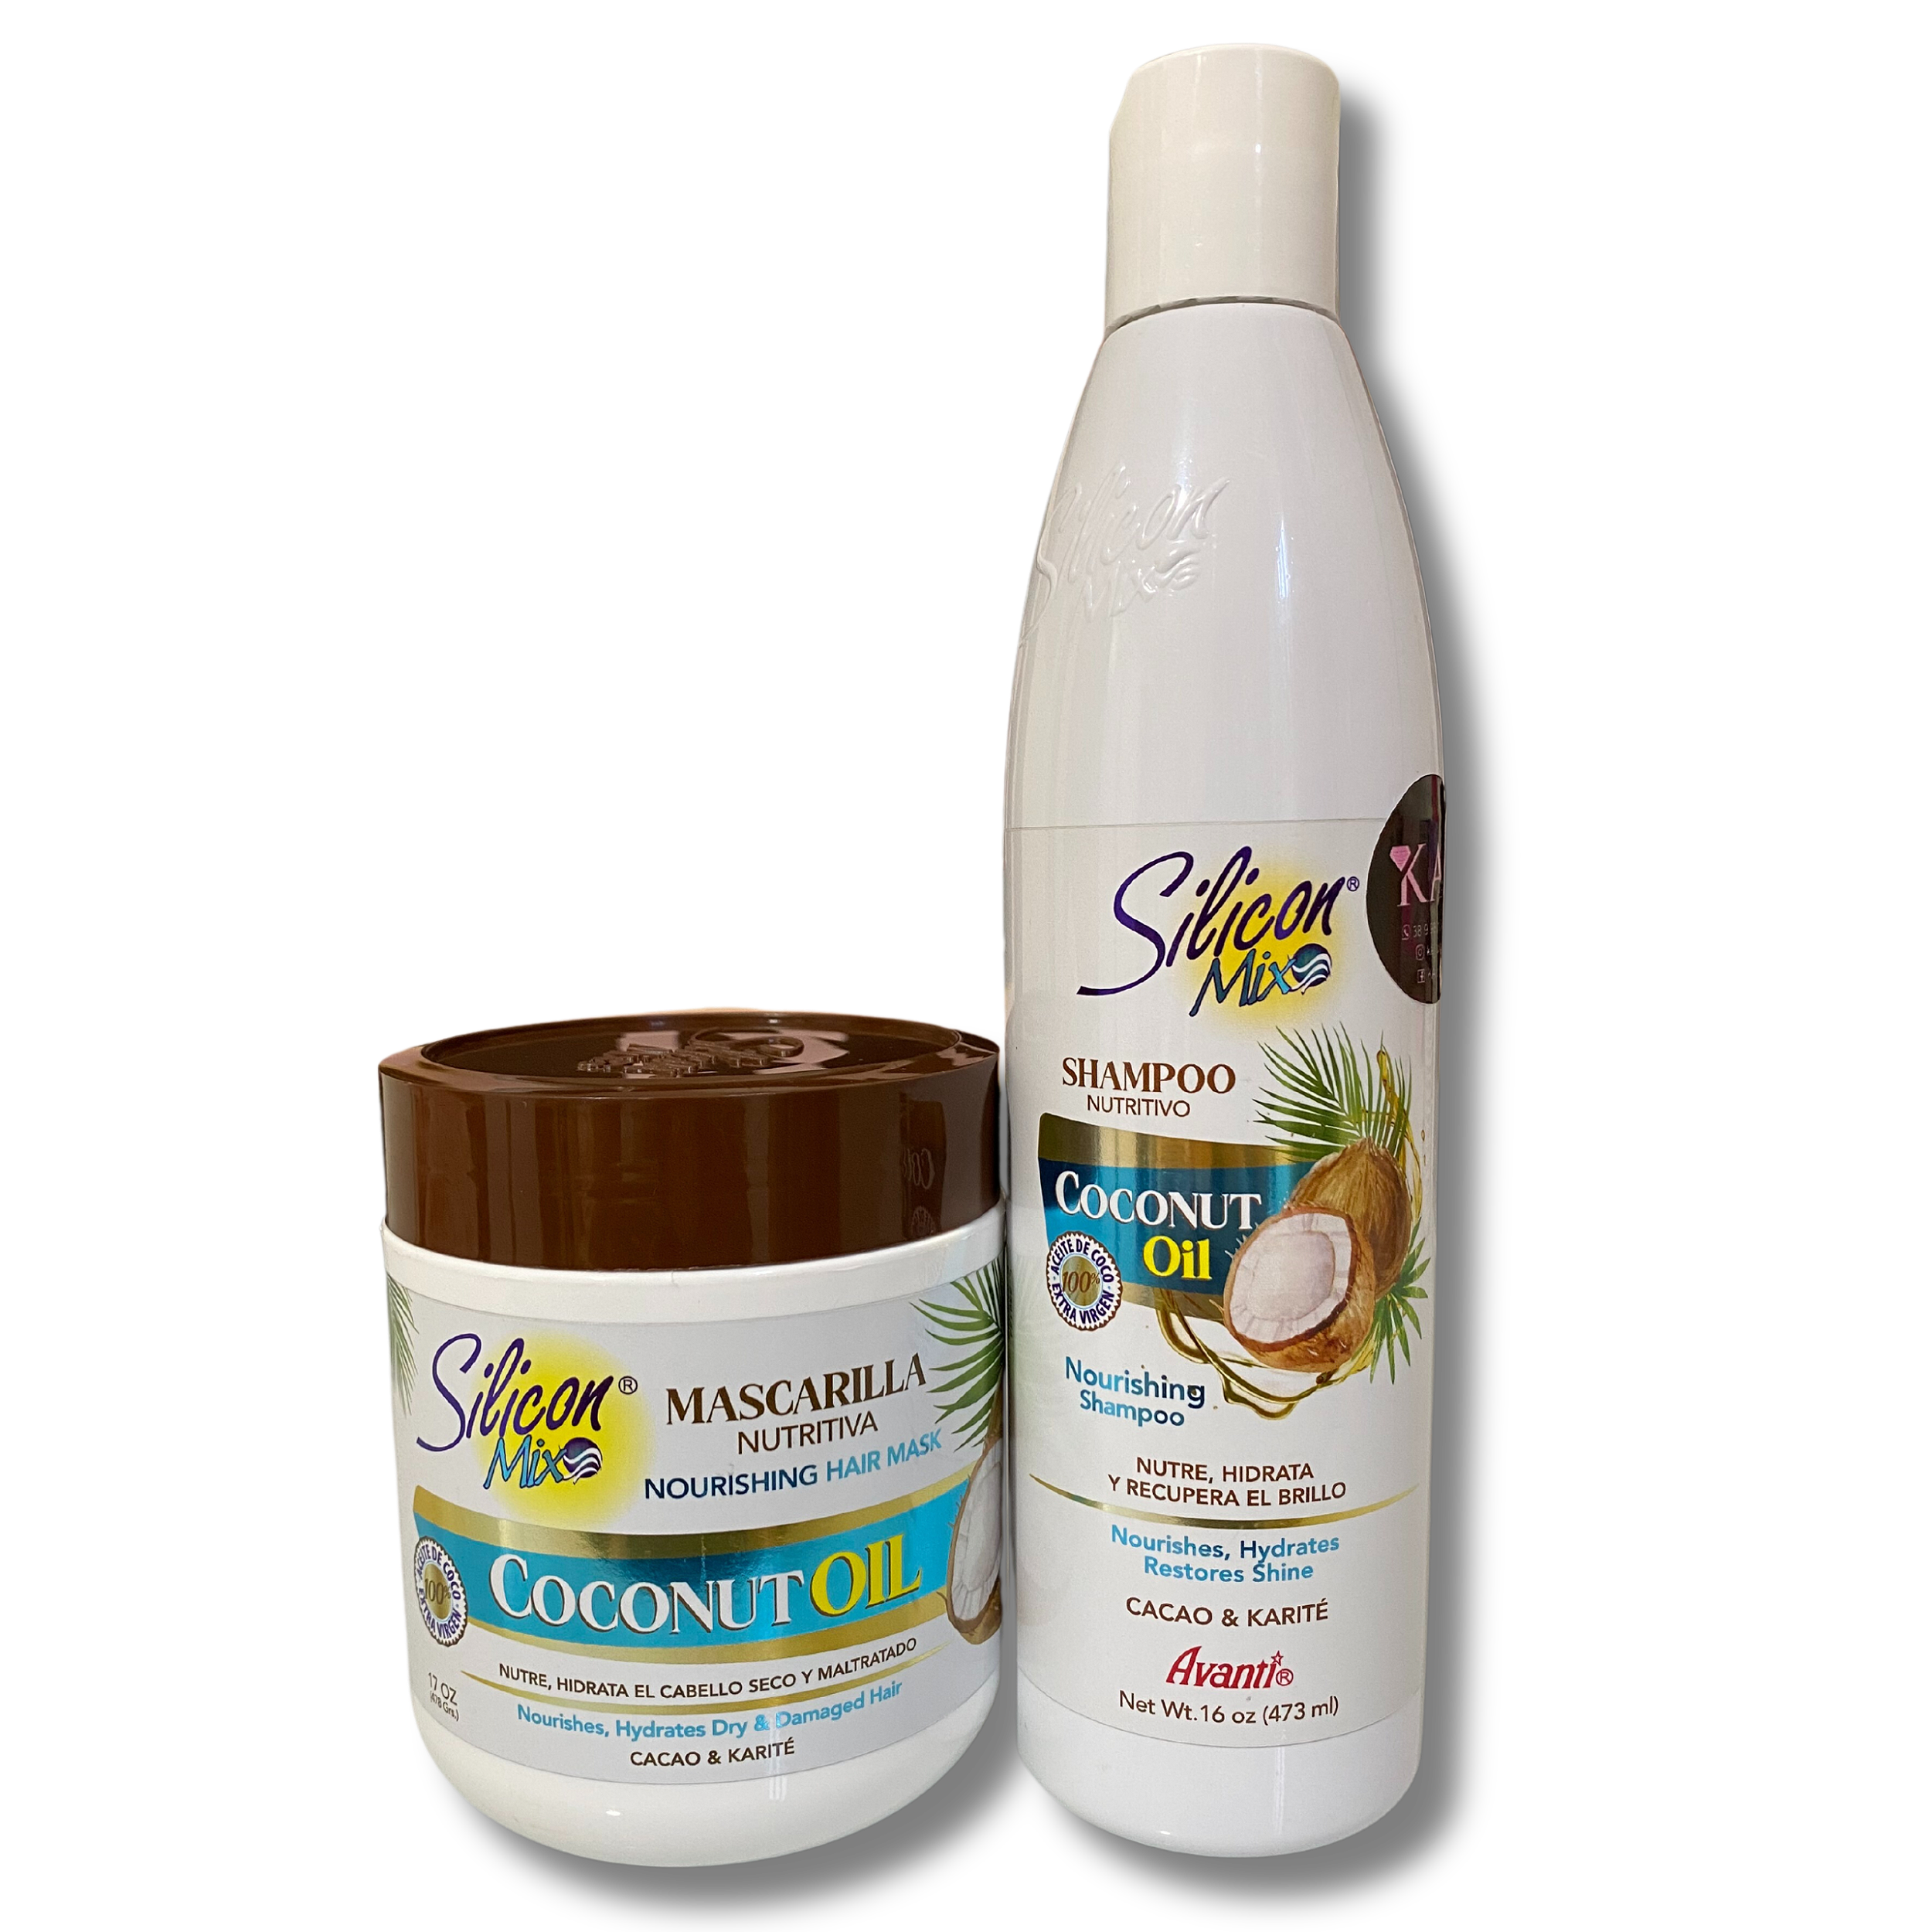 Kit Completo Mega Hidratante de Coco Secrets Shampoo Máscara e Óleo Bifásico